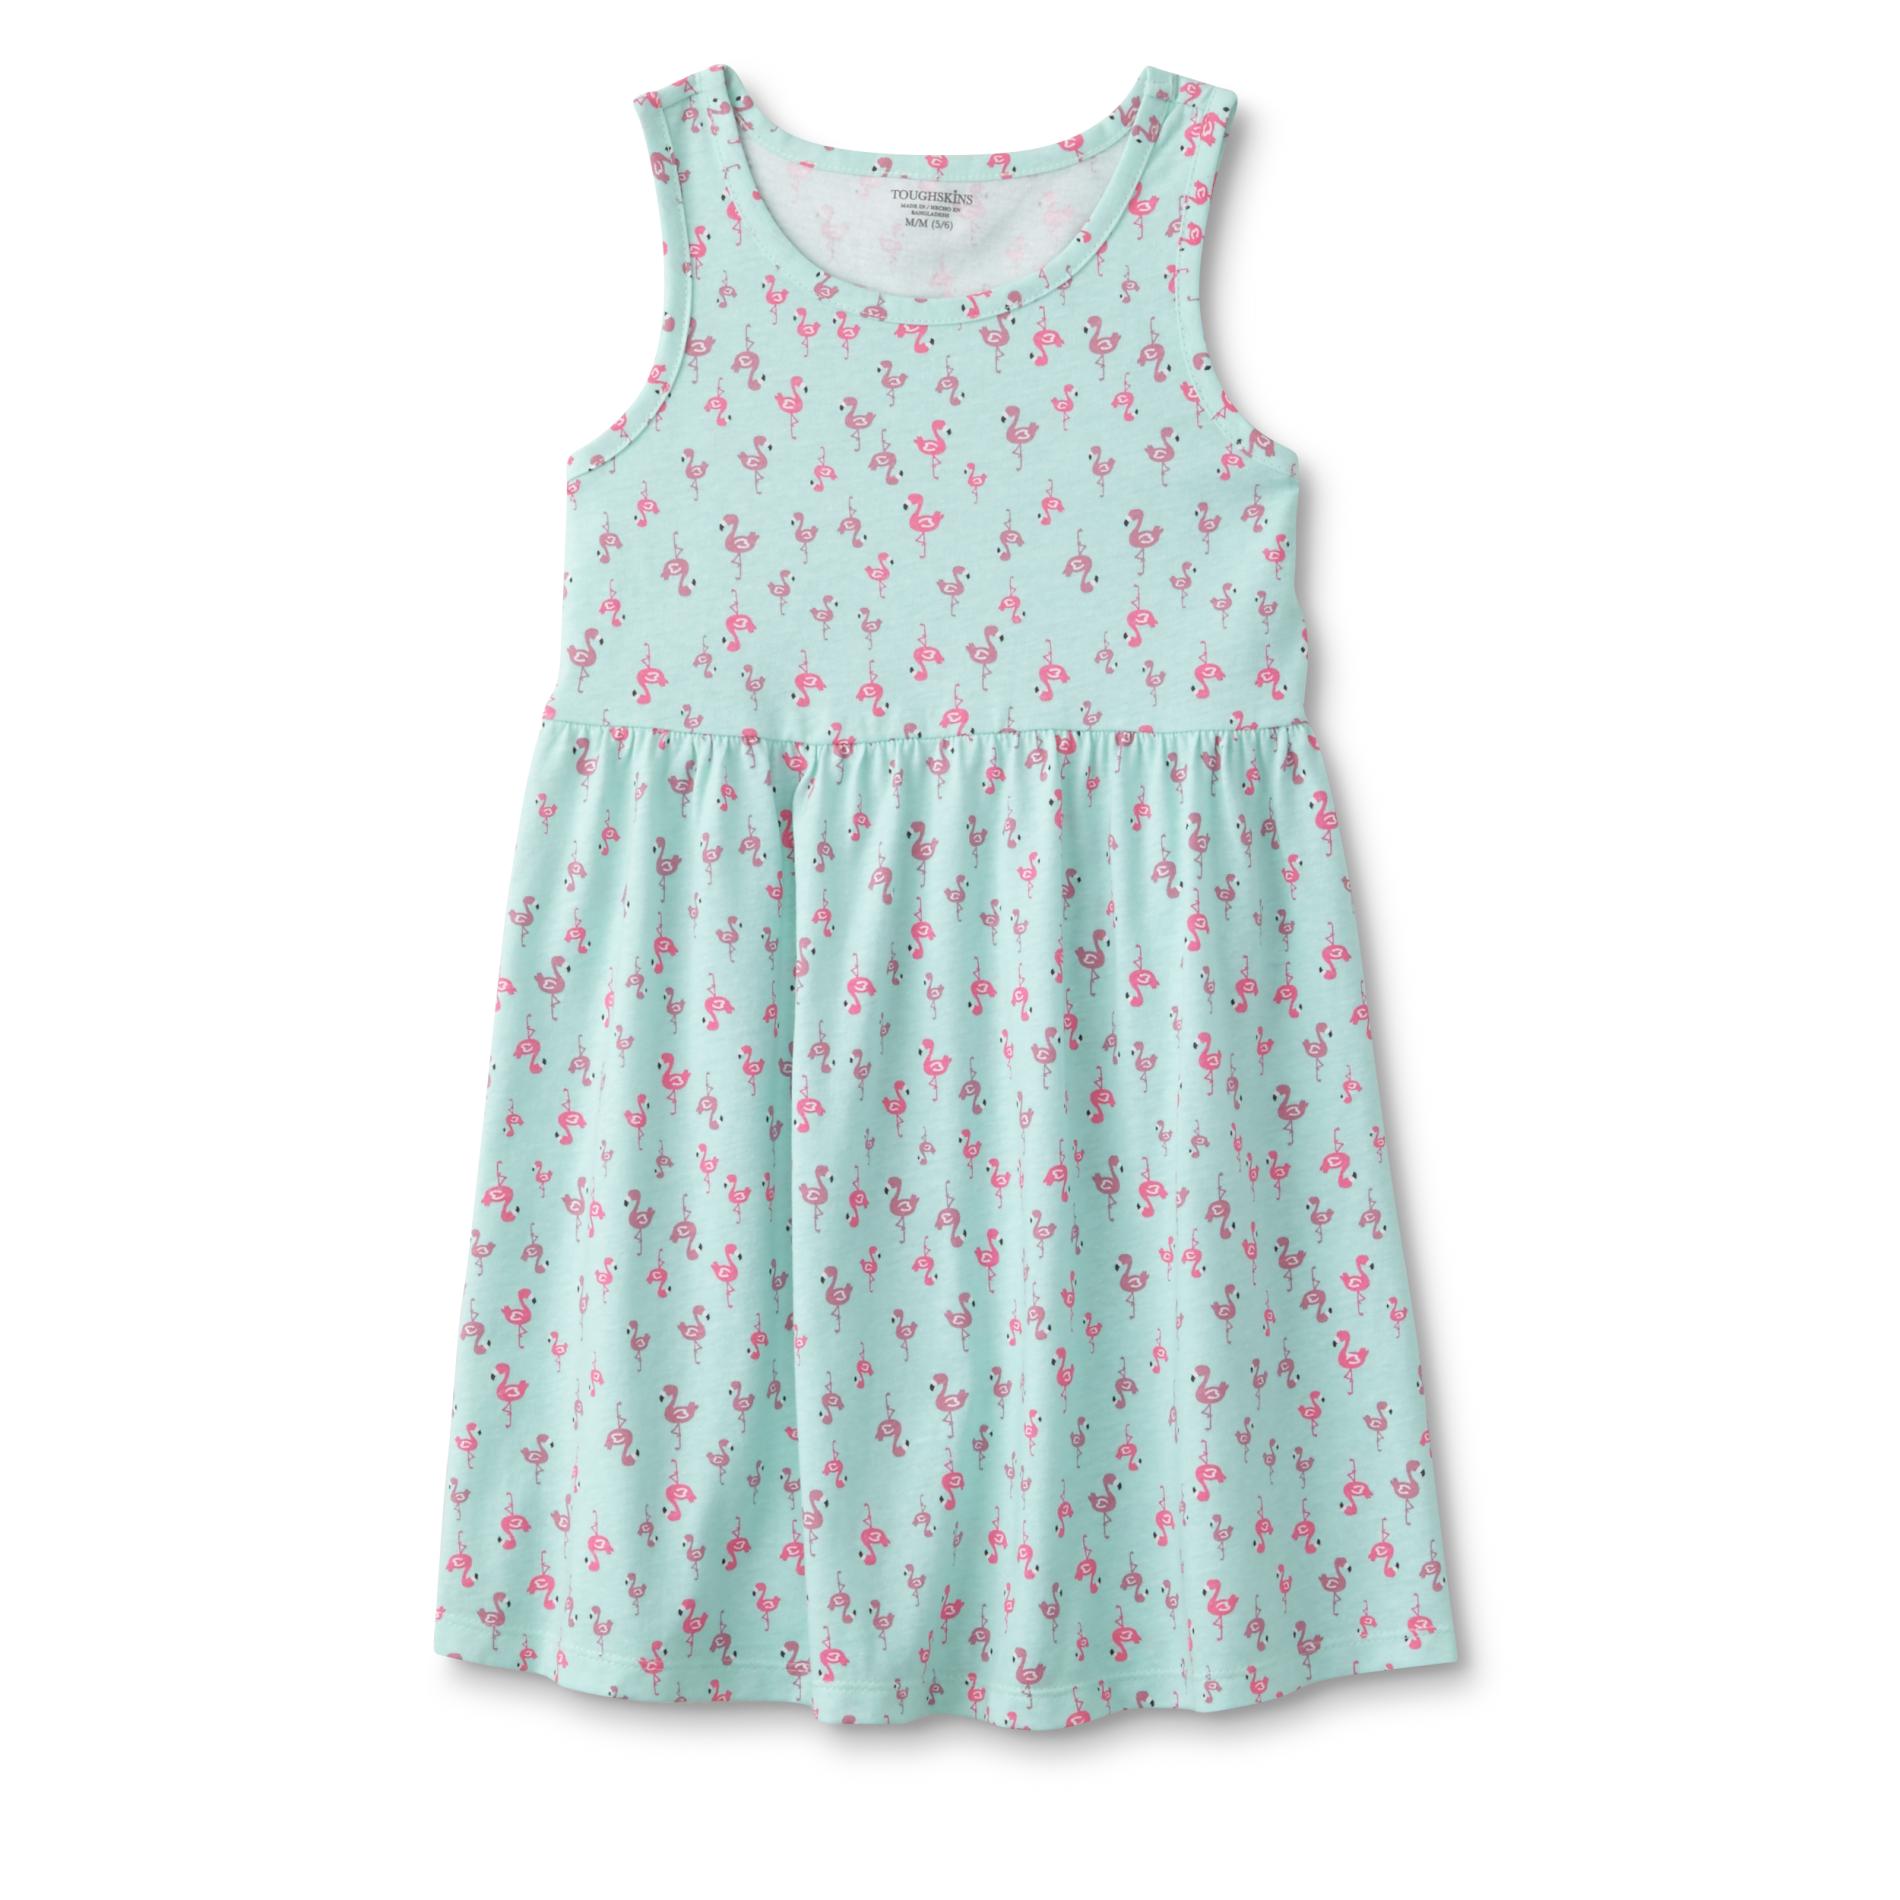 Toughskins Infant & Toddler Girls' Tank Dress - Flamingo